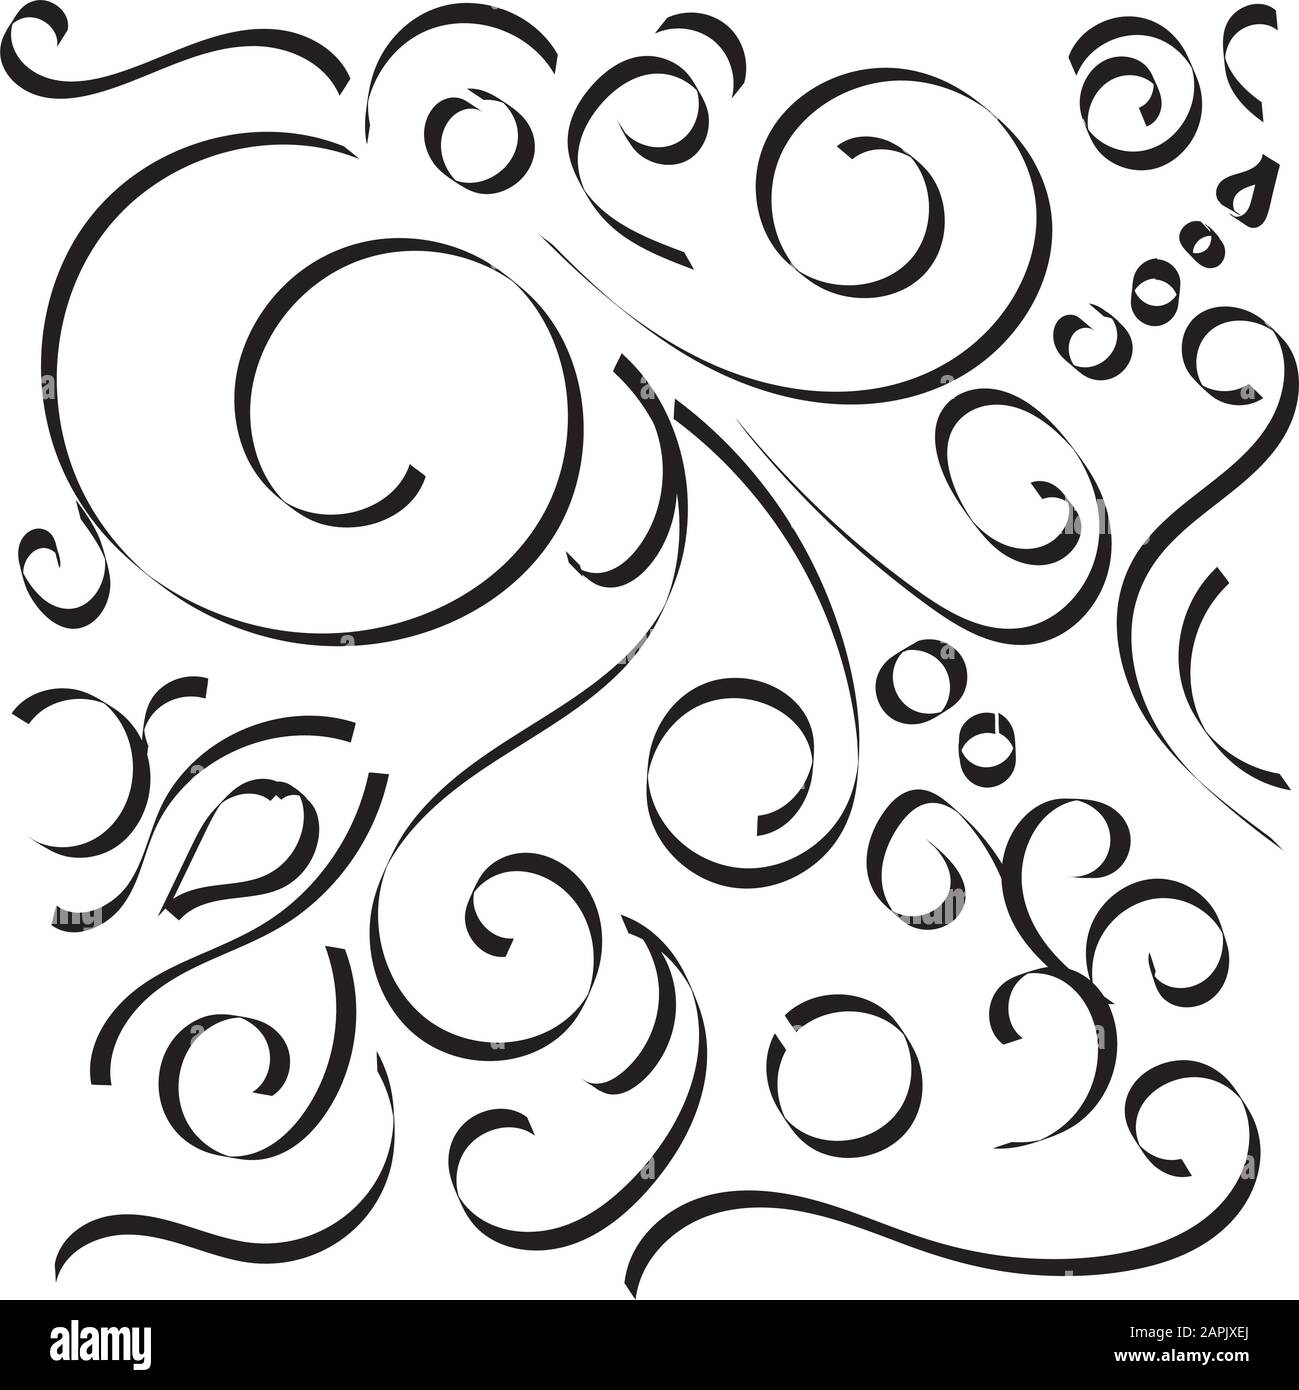 Swirl design element in doodle style Stock Vector Image & Art - Alamy